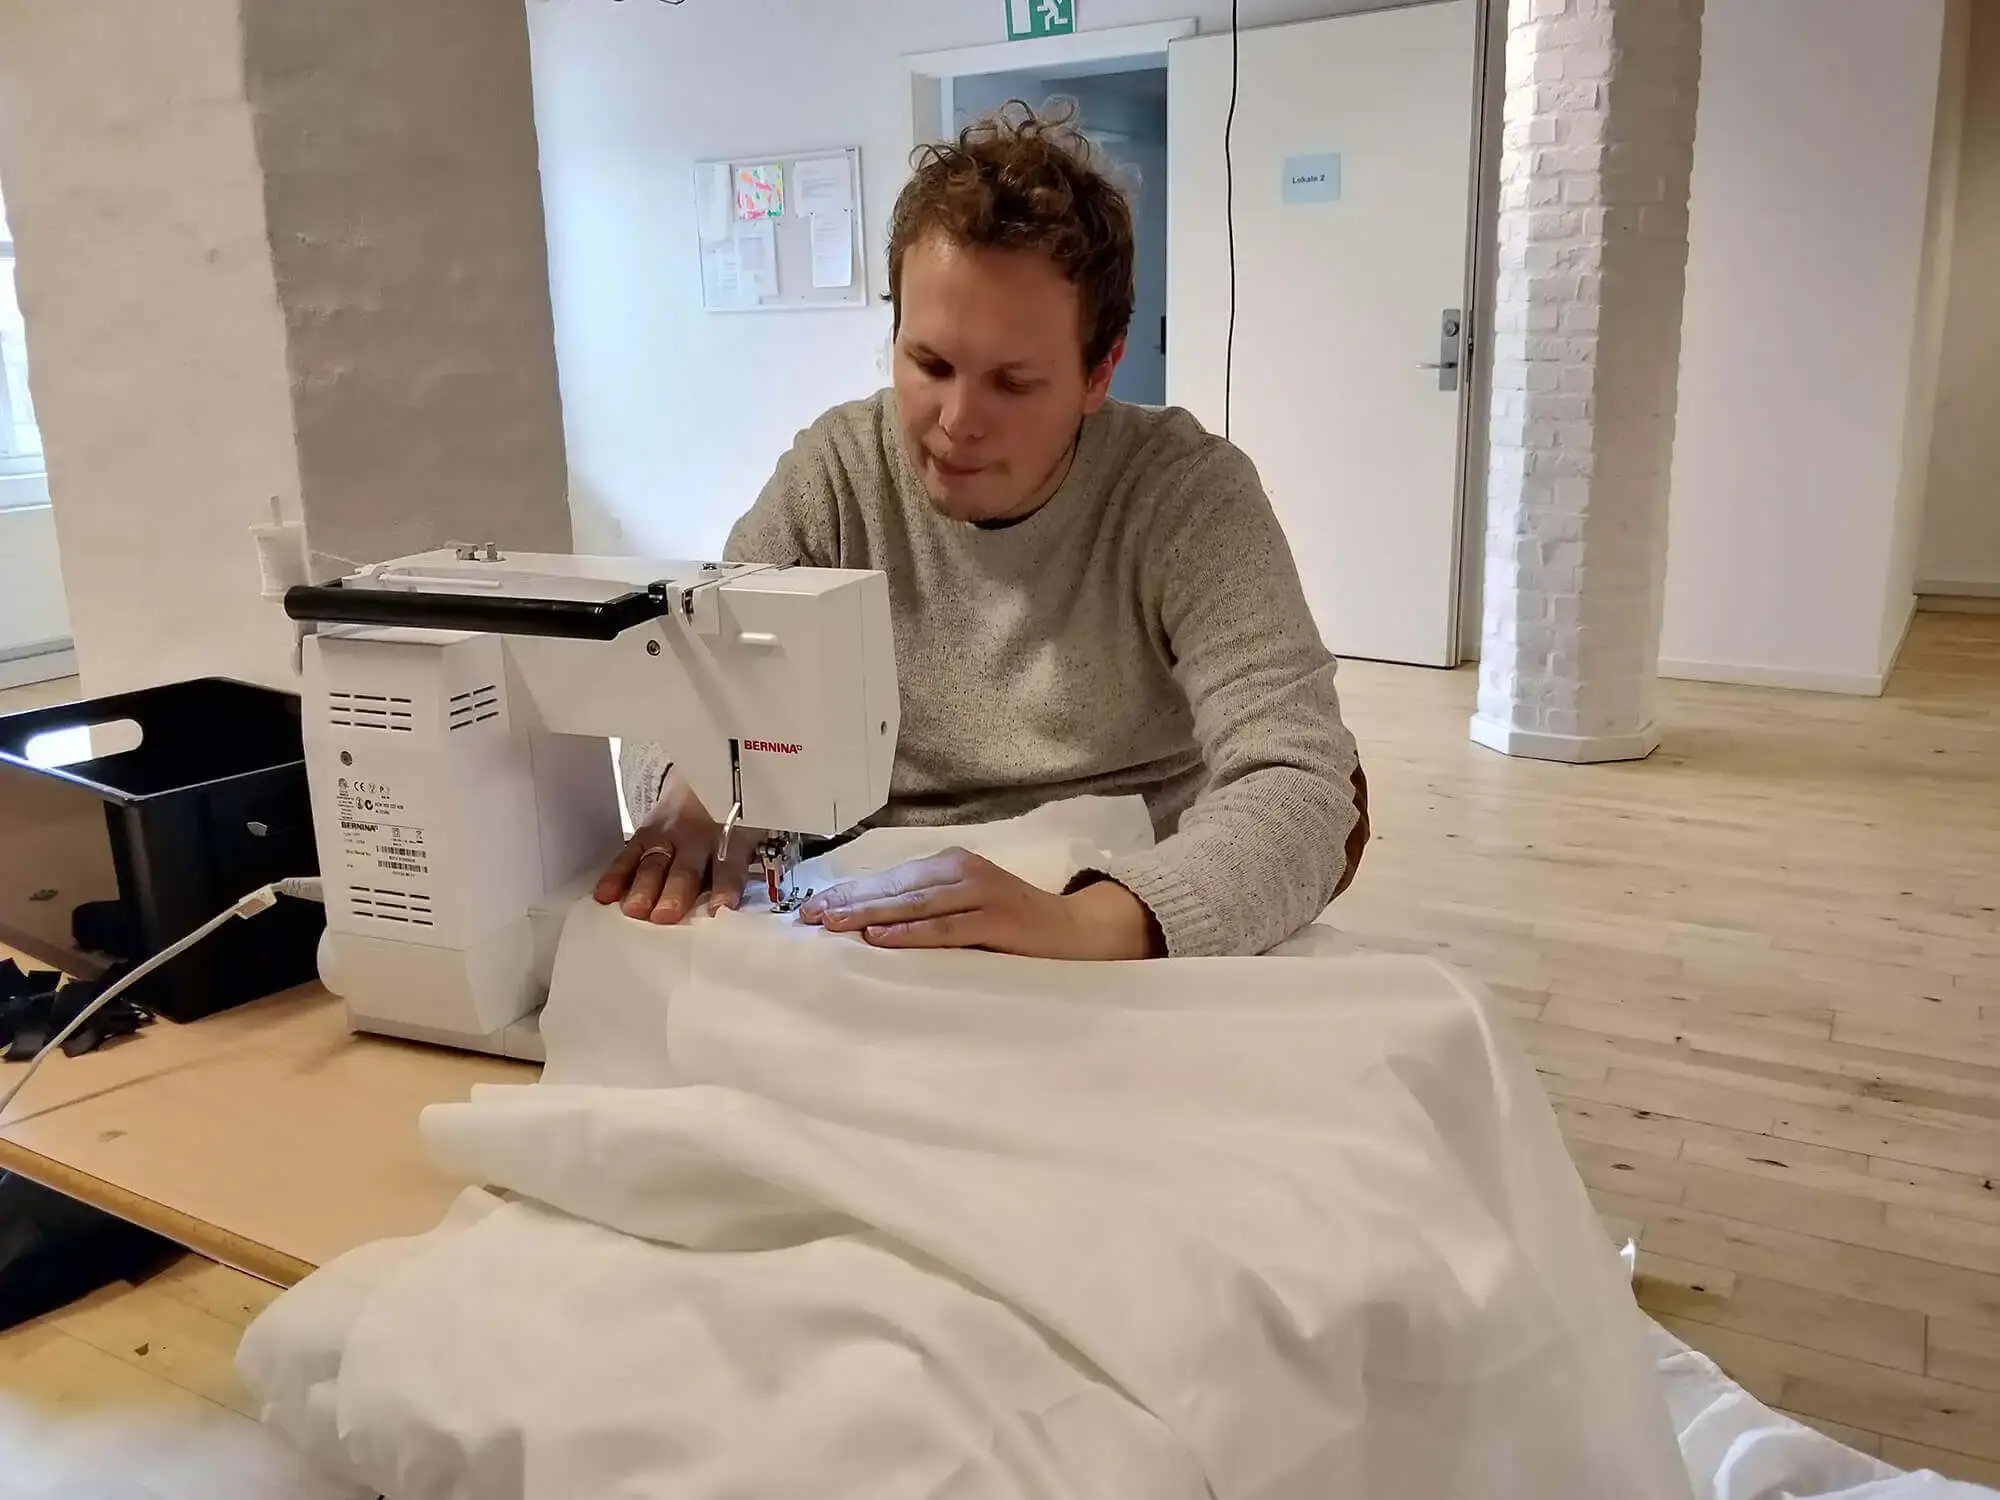 A man (myself) sewing a big sheet on a sewing machine